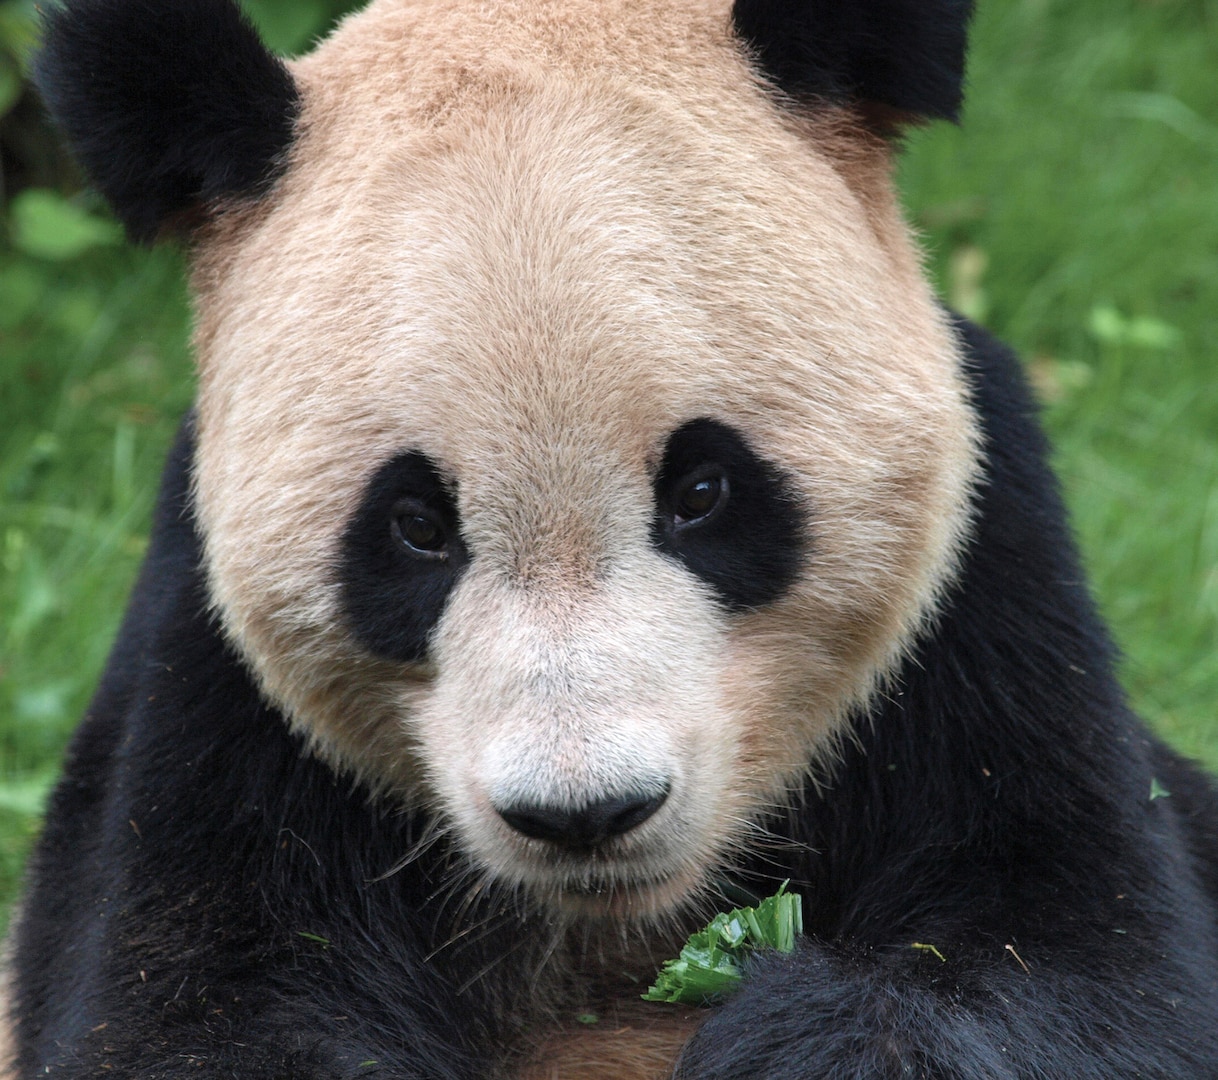 Photo of panda by Digital Story. June 27, 2008